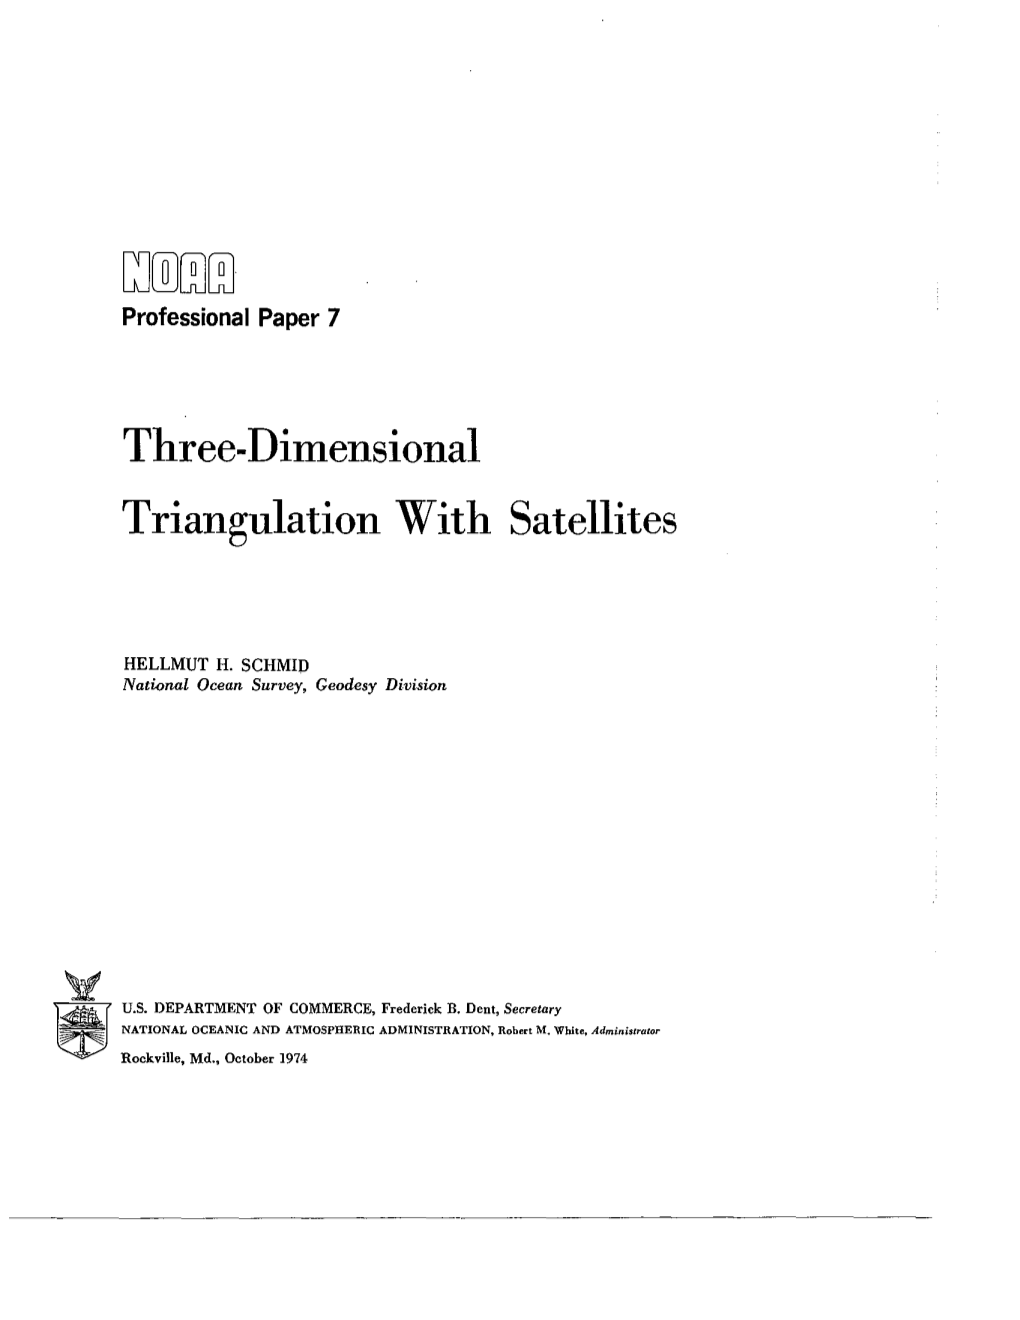 Three-Dimensional Triangulation with Satellites